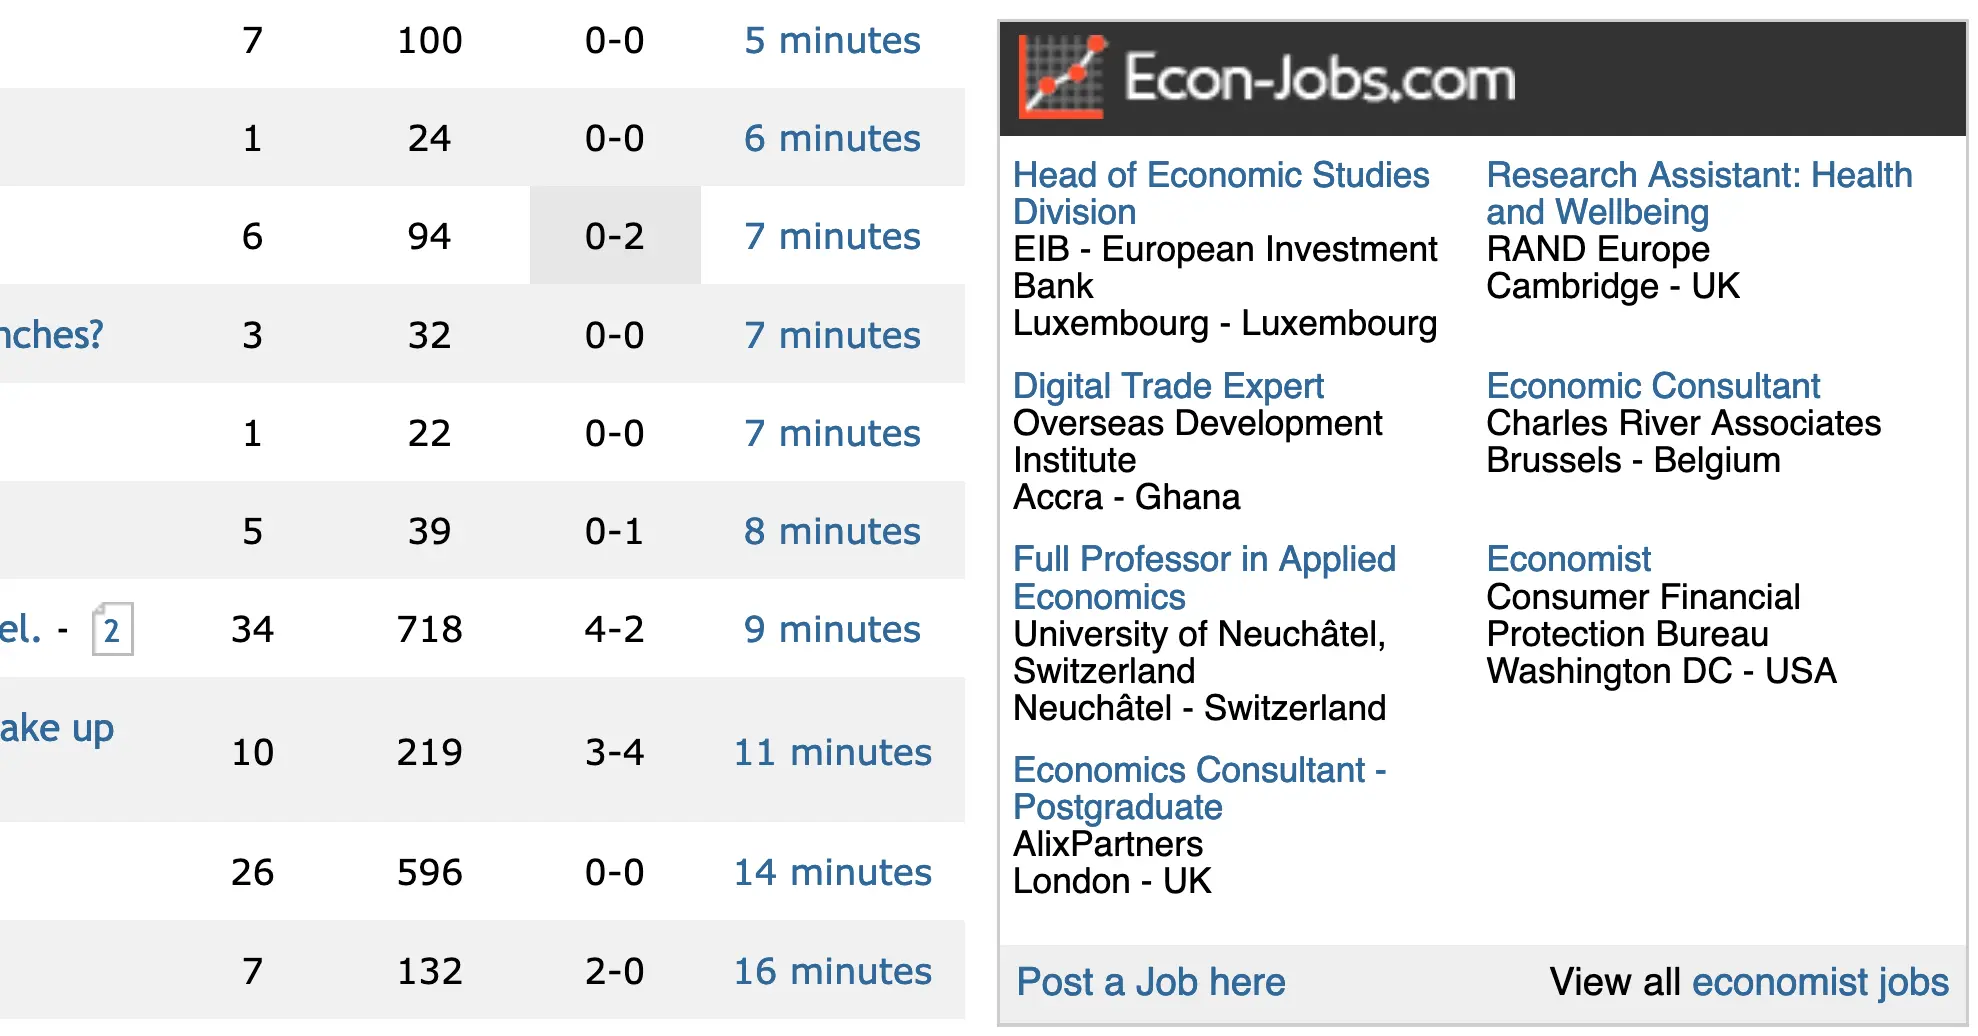 Econ-Jobs.com advertises on EJMR